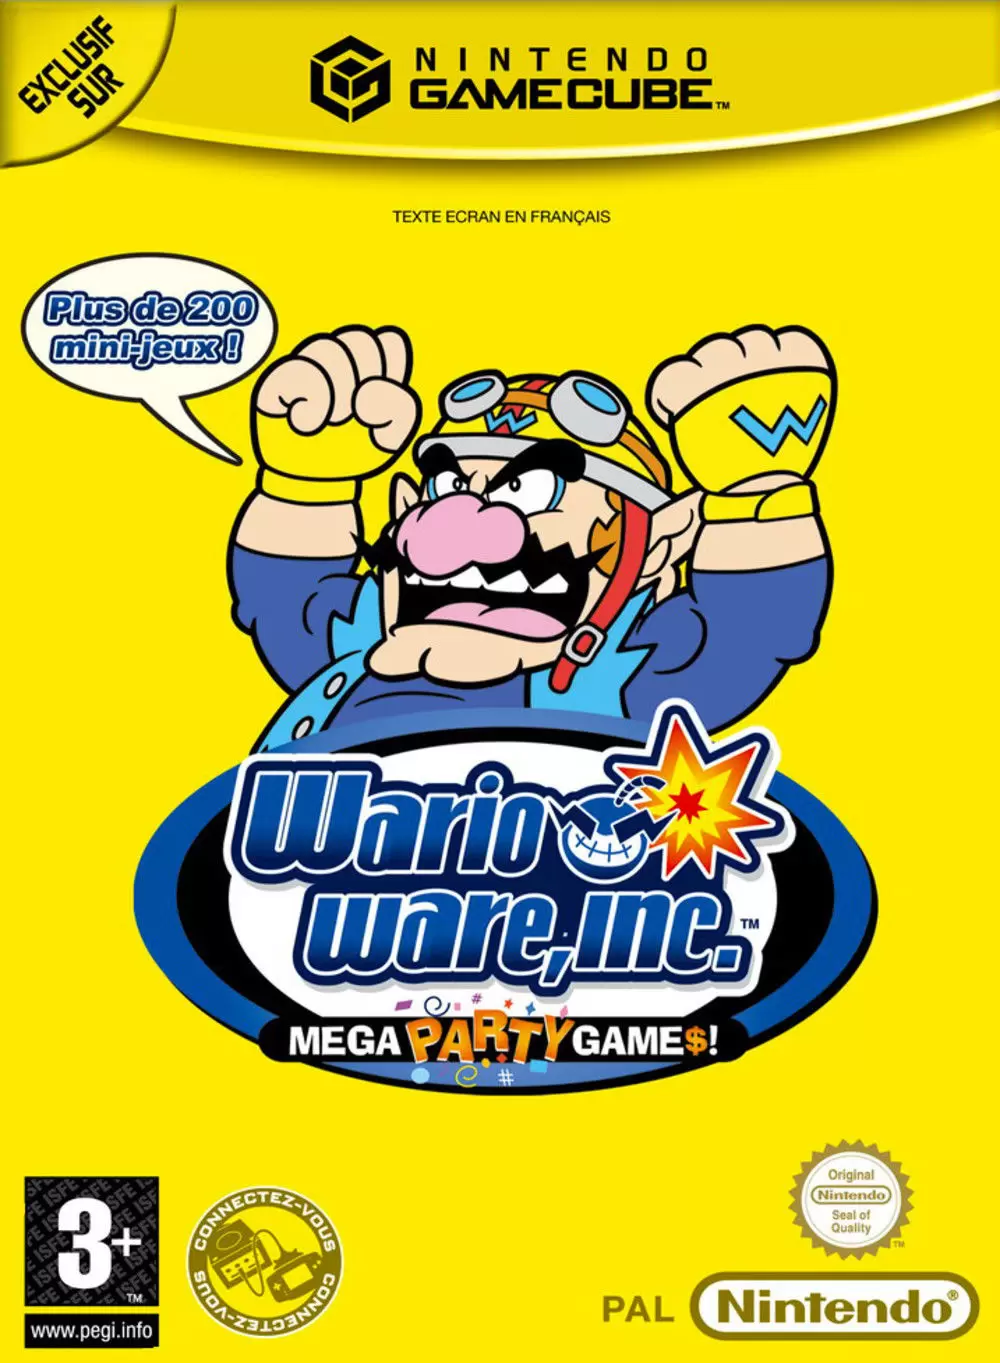 Jeux Gamecube - WarioWare, Inc.: Mega Party Game$!